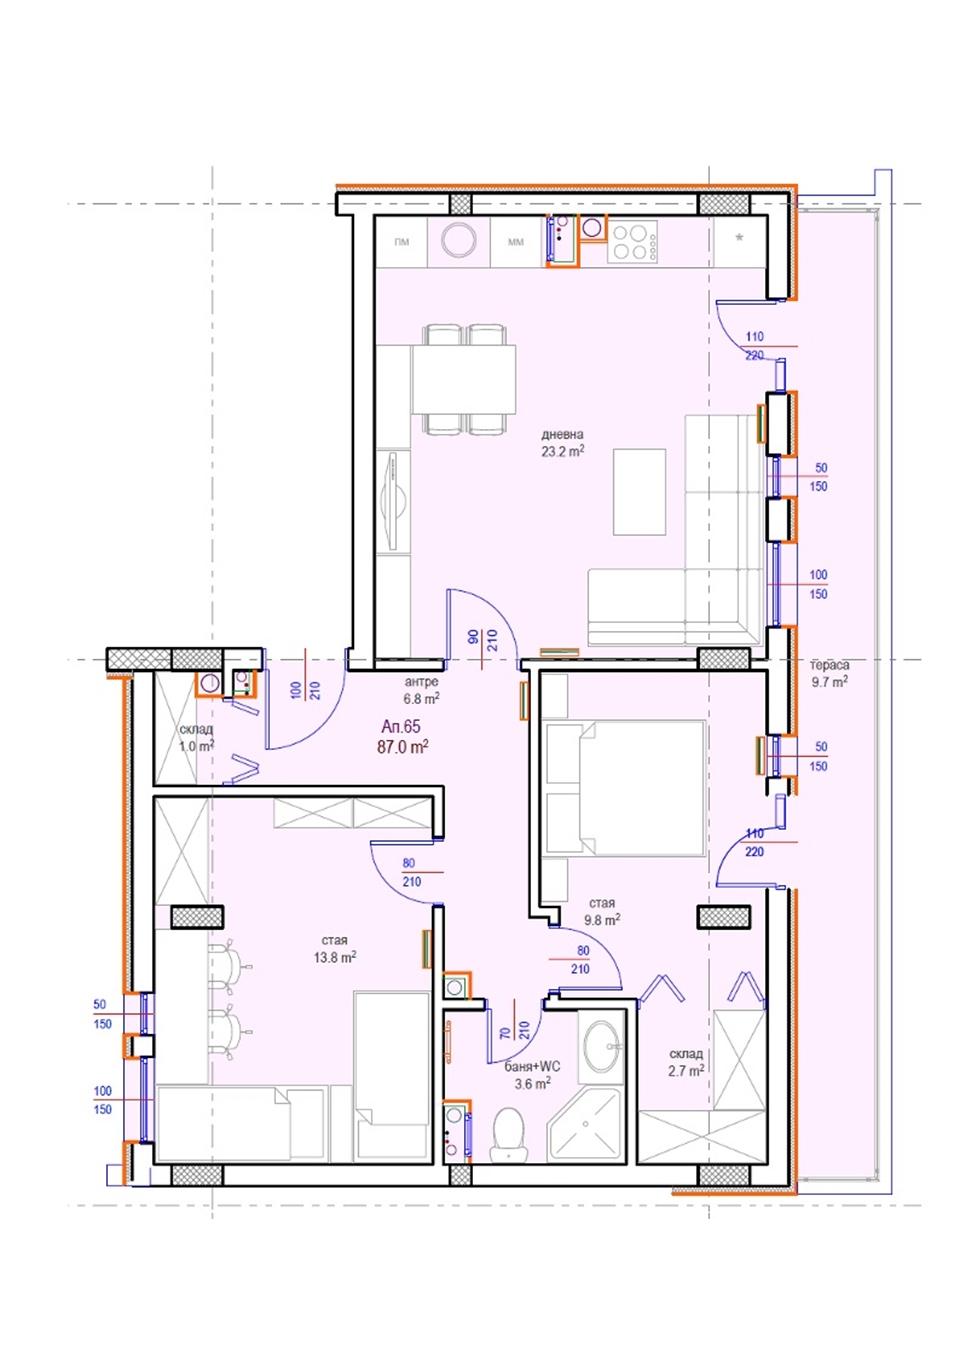 Апартамент № 65, Вход В, 7 етаж, Изложение И-З